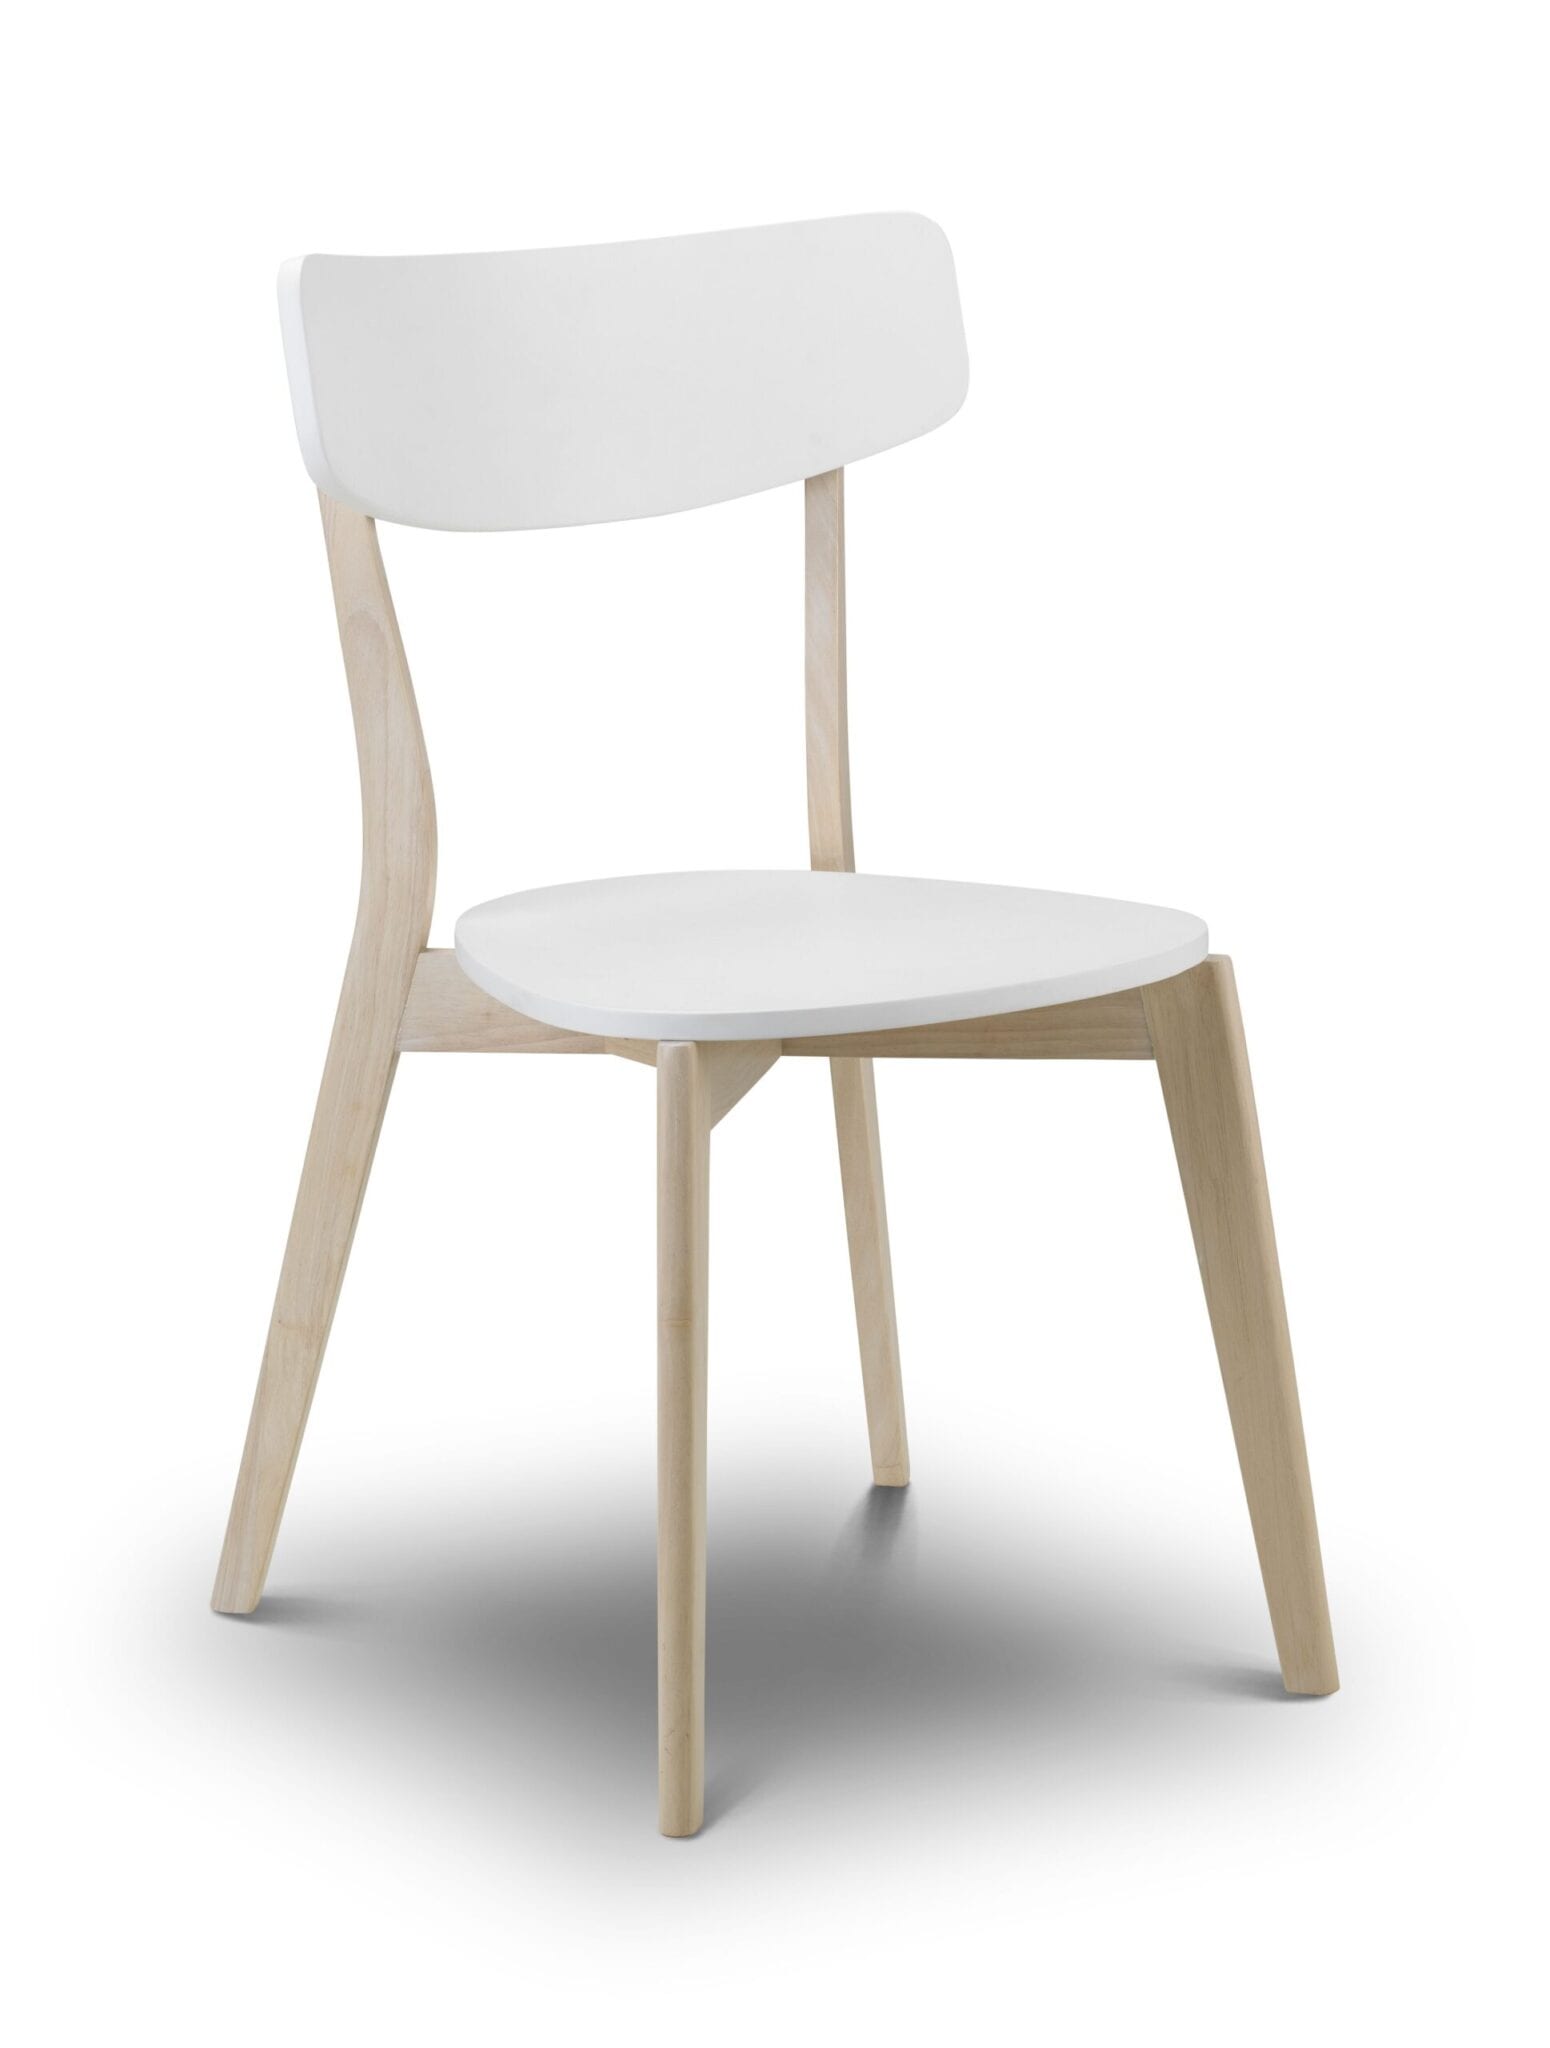 Plaza Chair White/Limed Oak